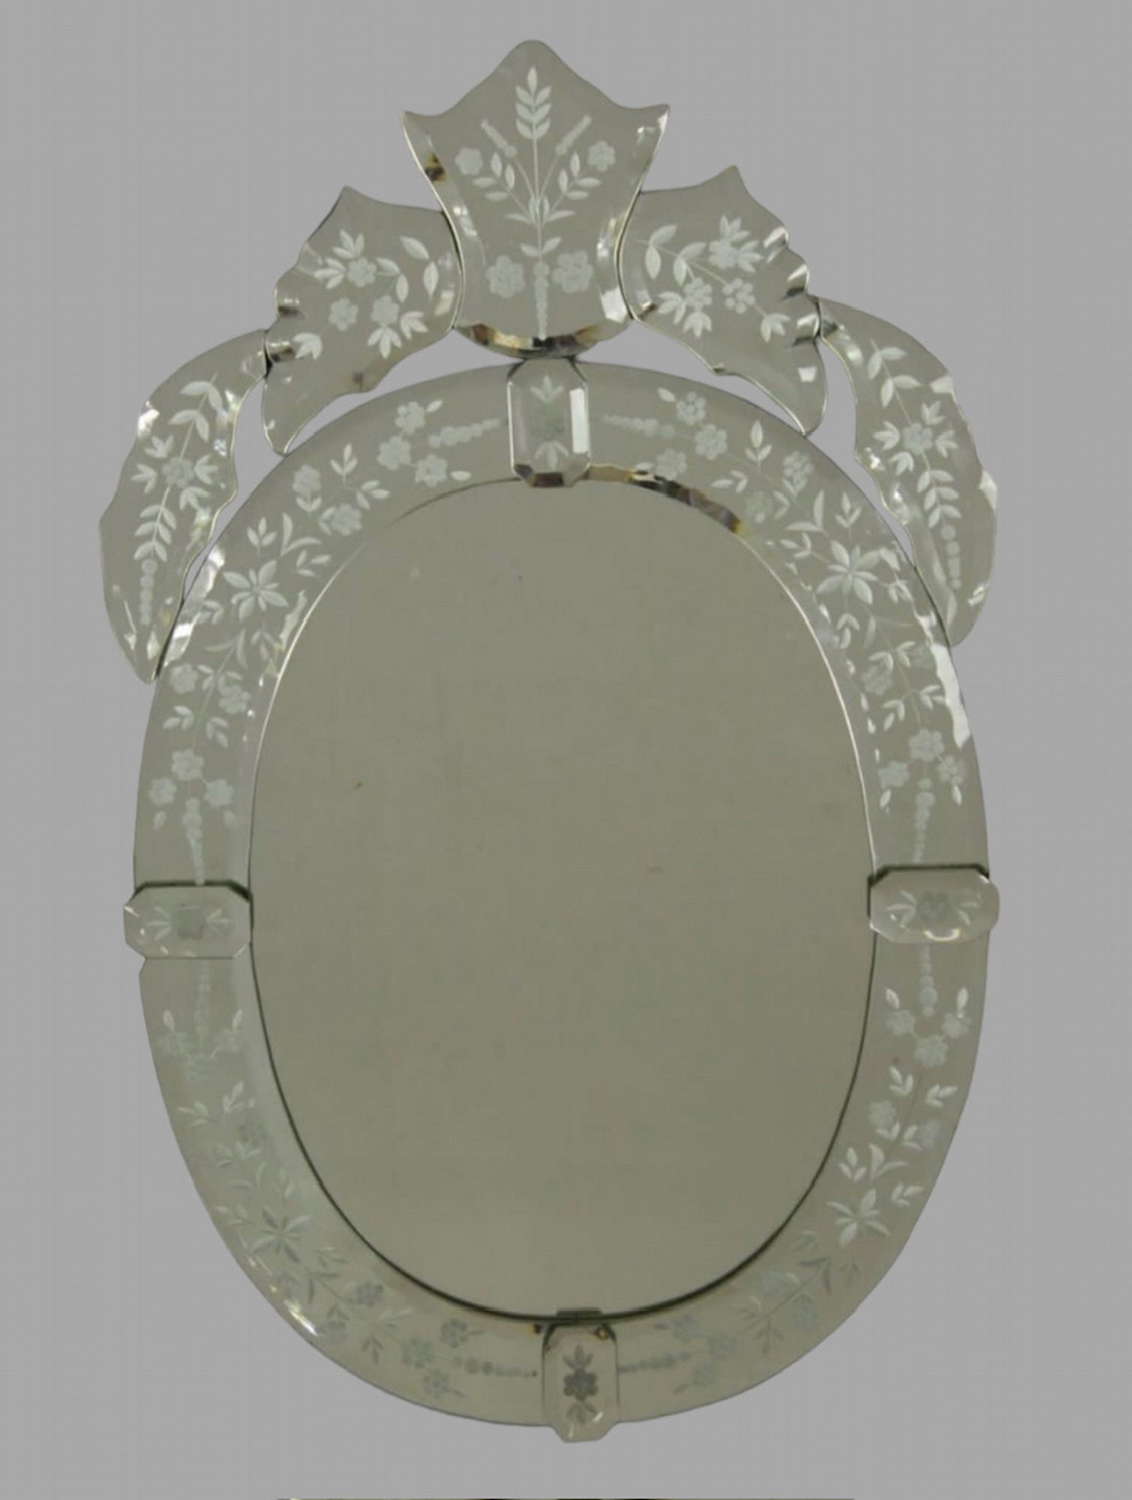 A c1900 Oval Wall Mirror